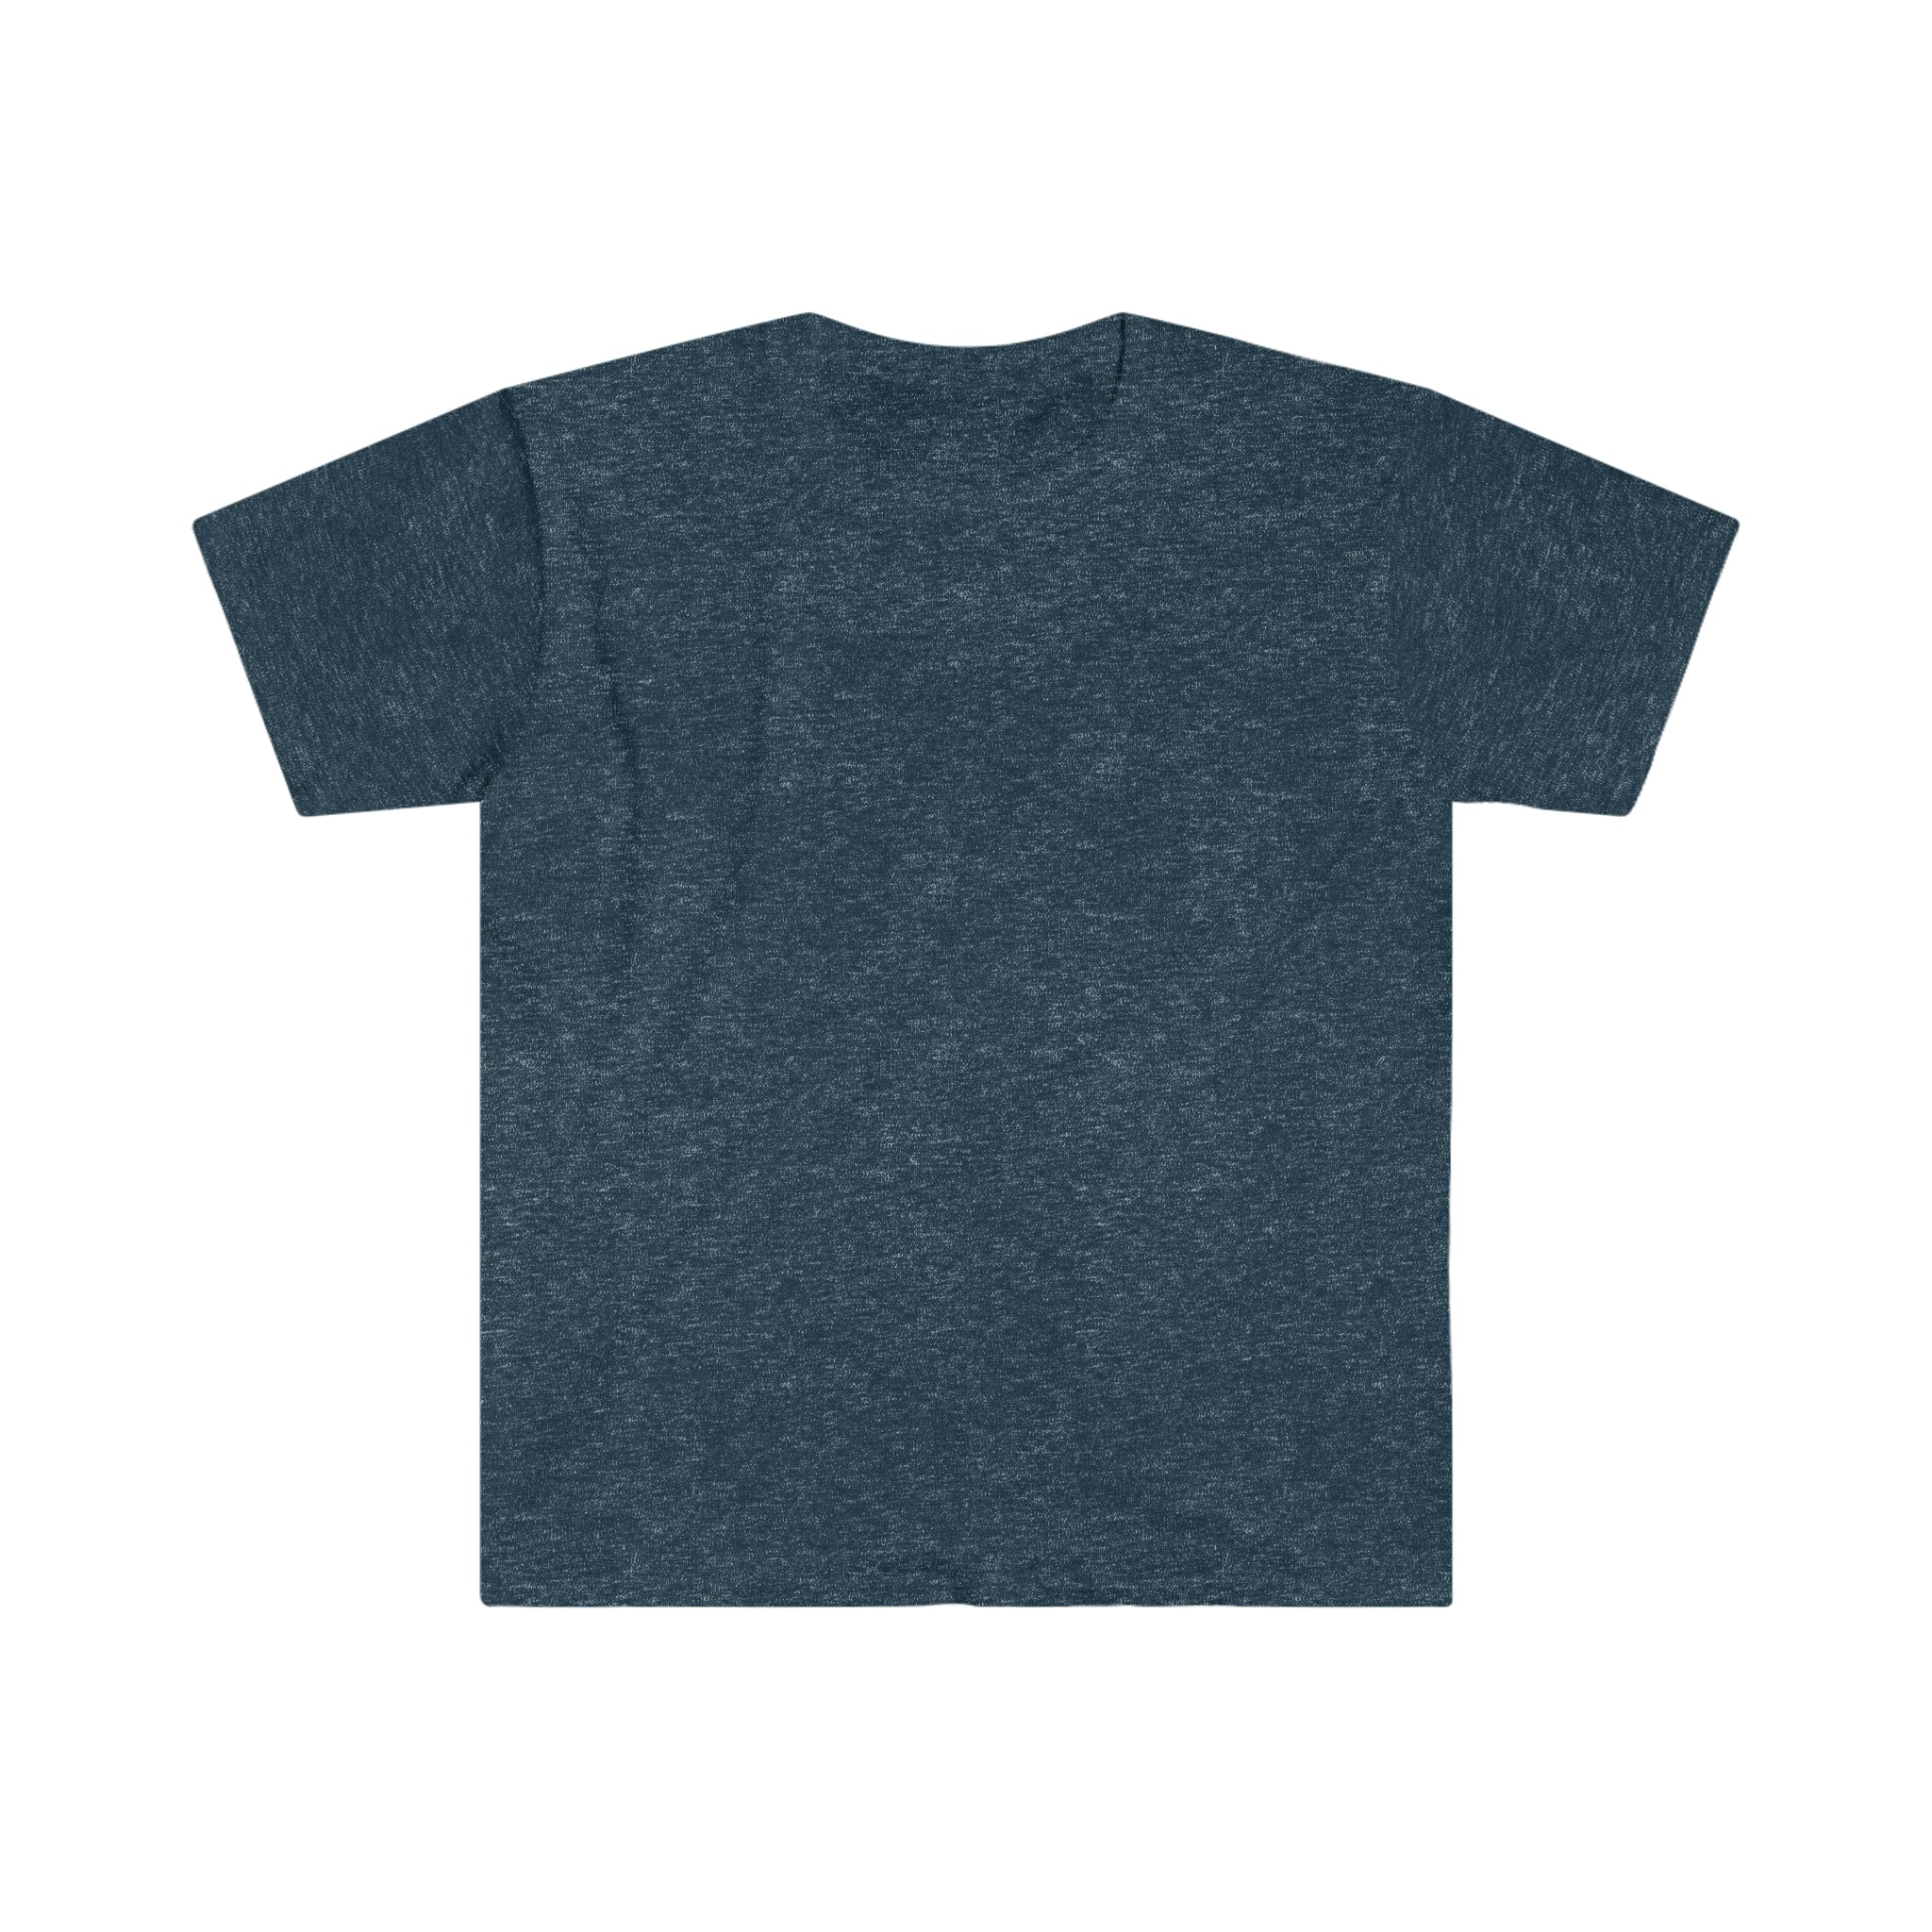 Feel It Unisex Softstyle T-Shirt